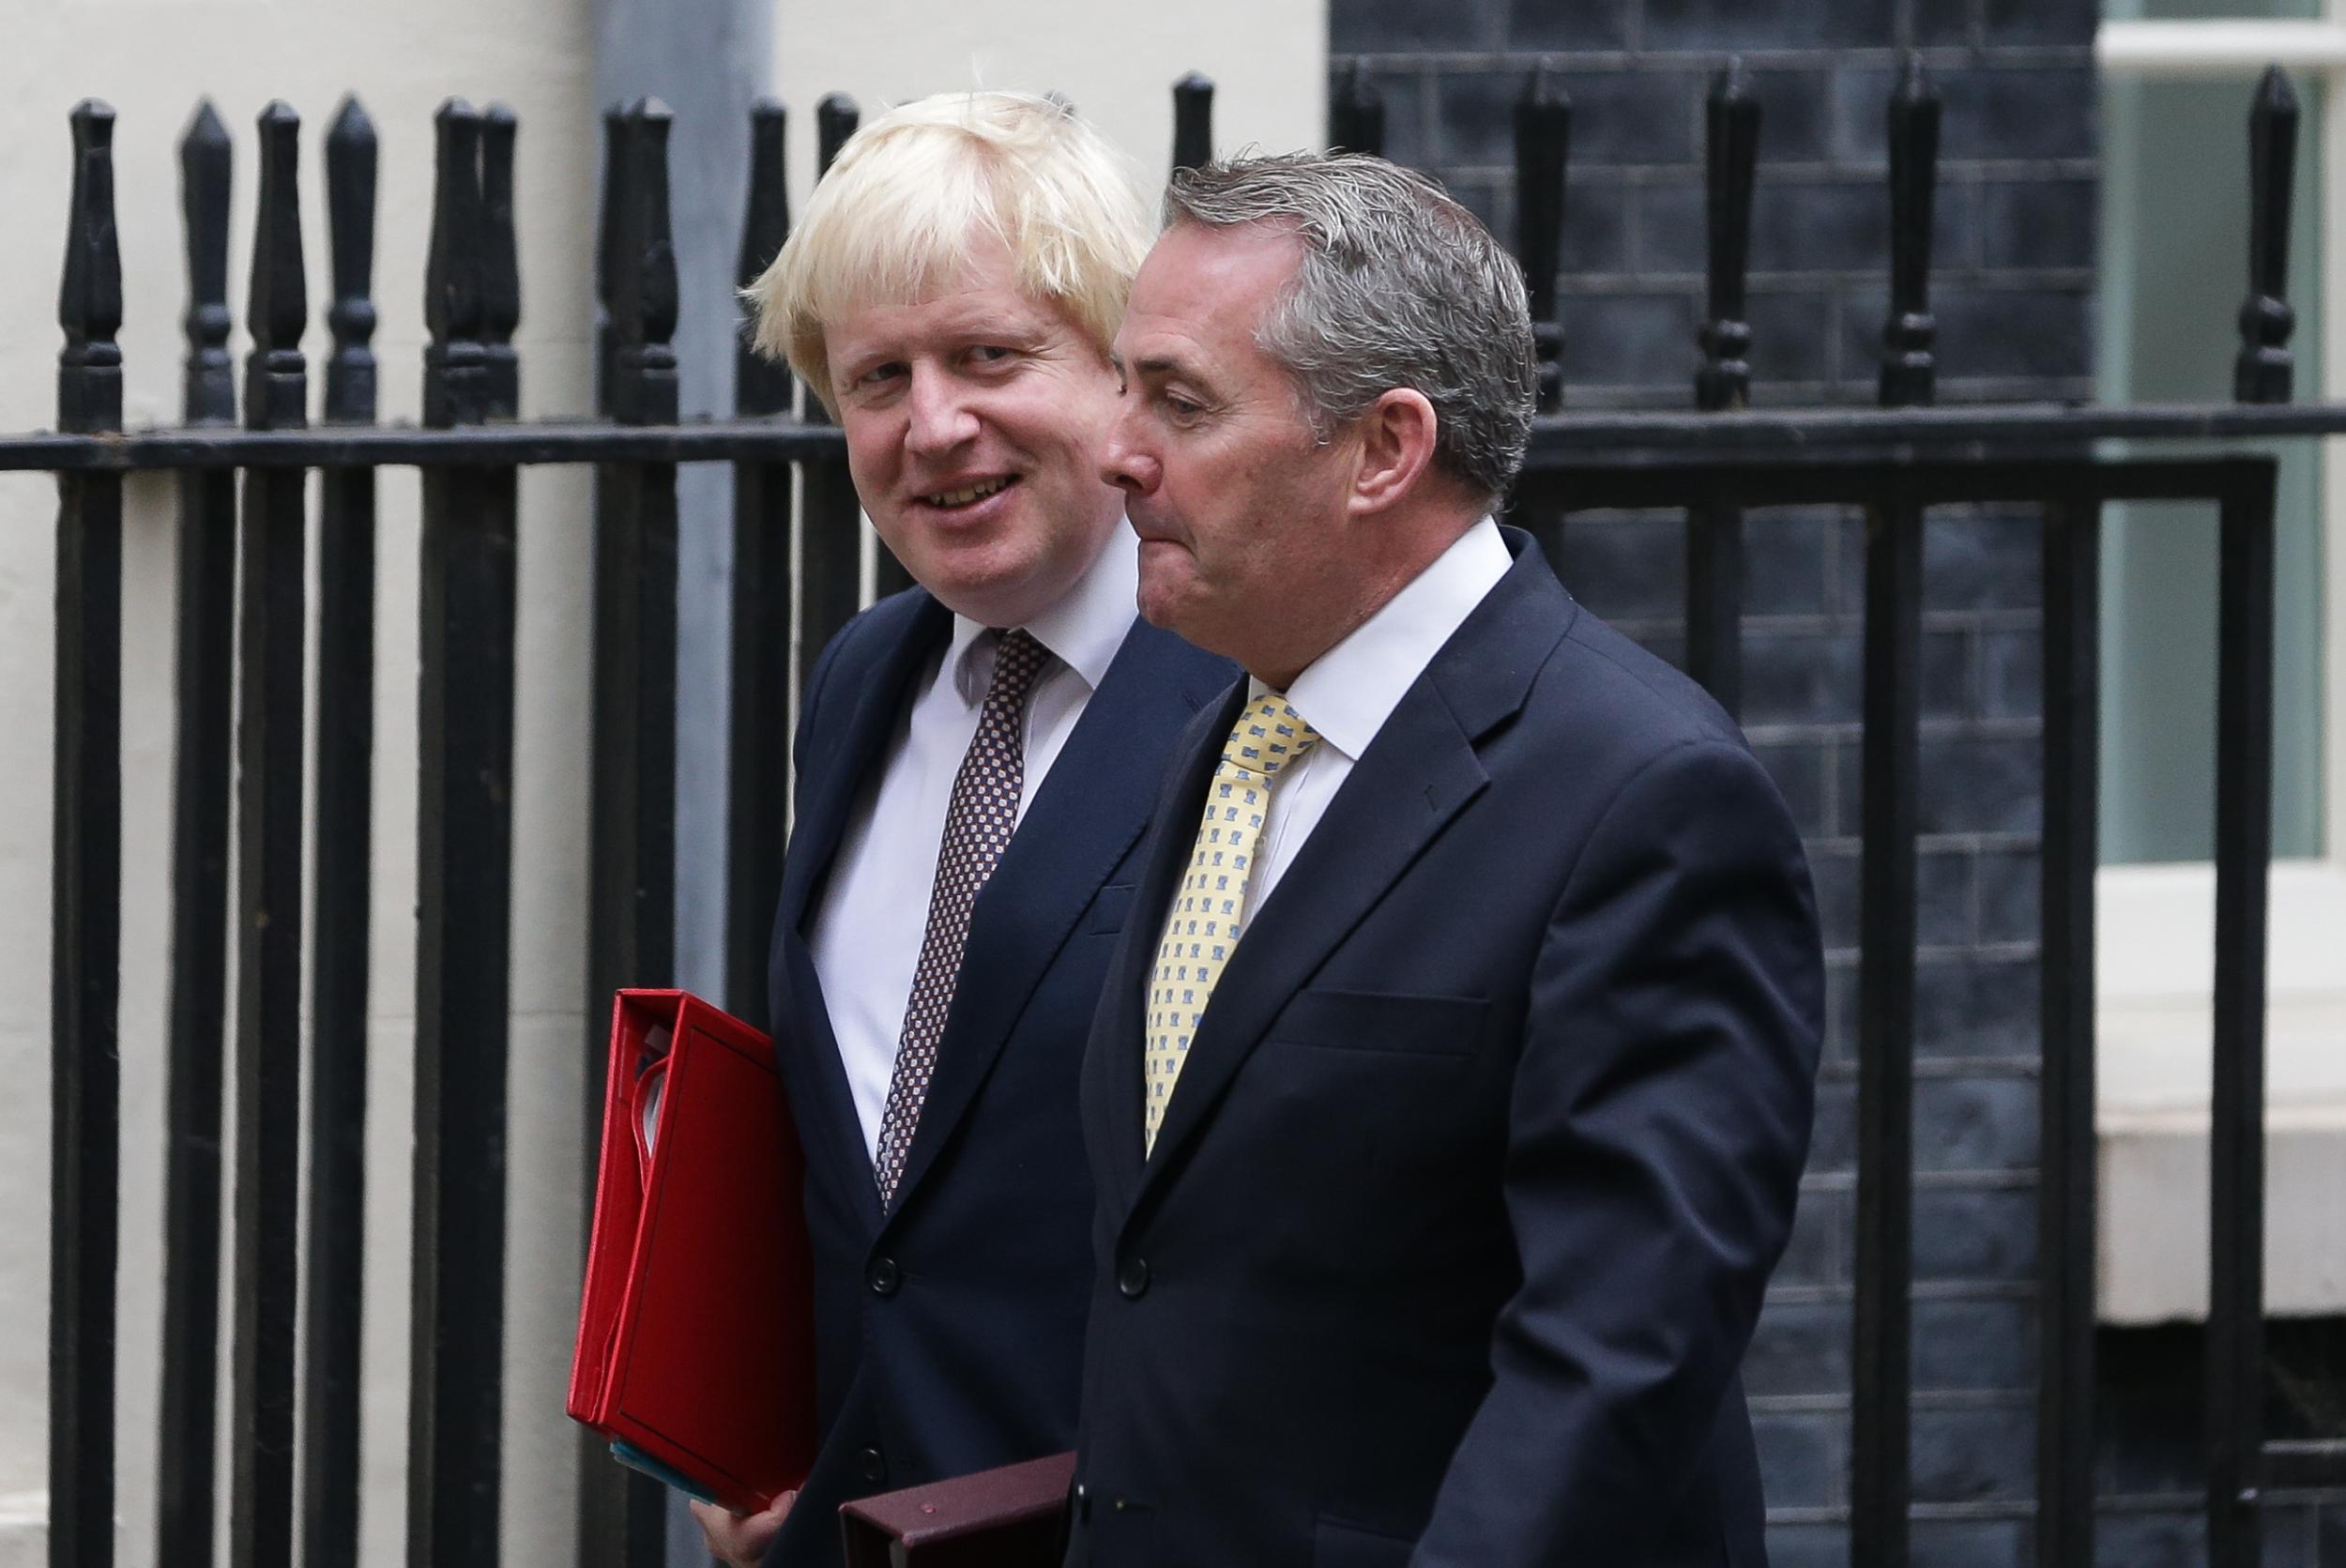 Foreign Secretary Boris Johnson and International Trade Secretary Liam Fox (pictured), as well as Brexit Secretary David Davis will meet the Norwegian foreign minister